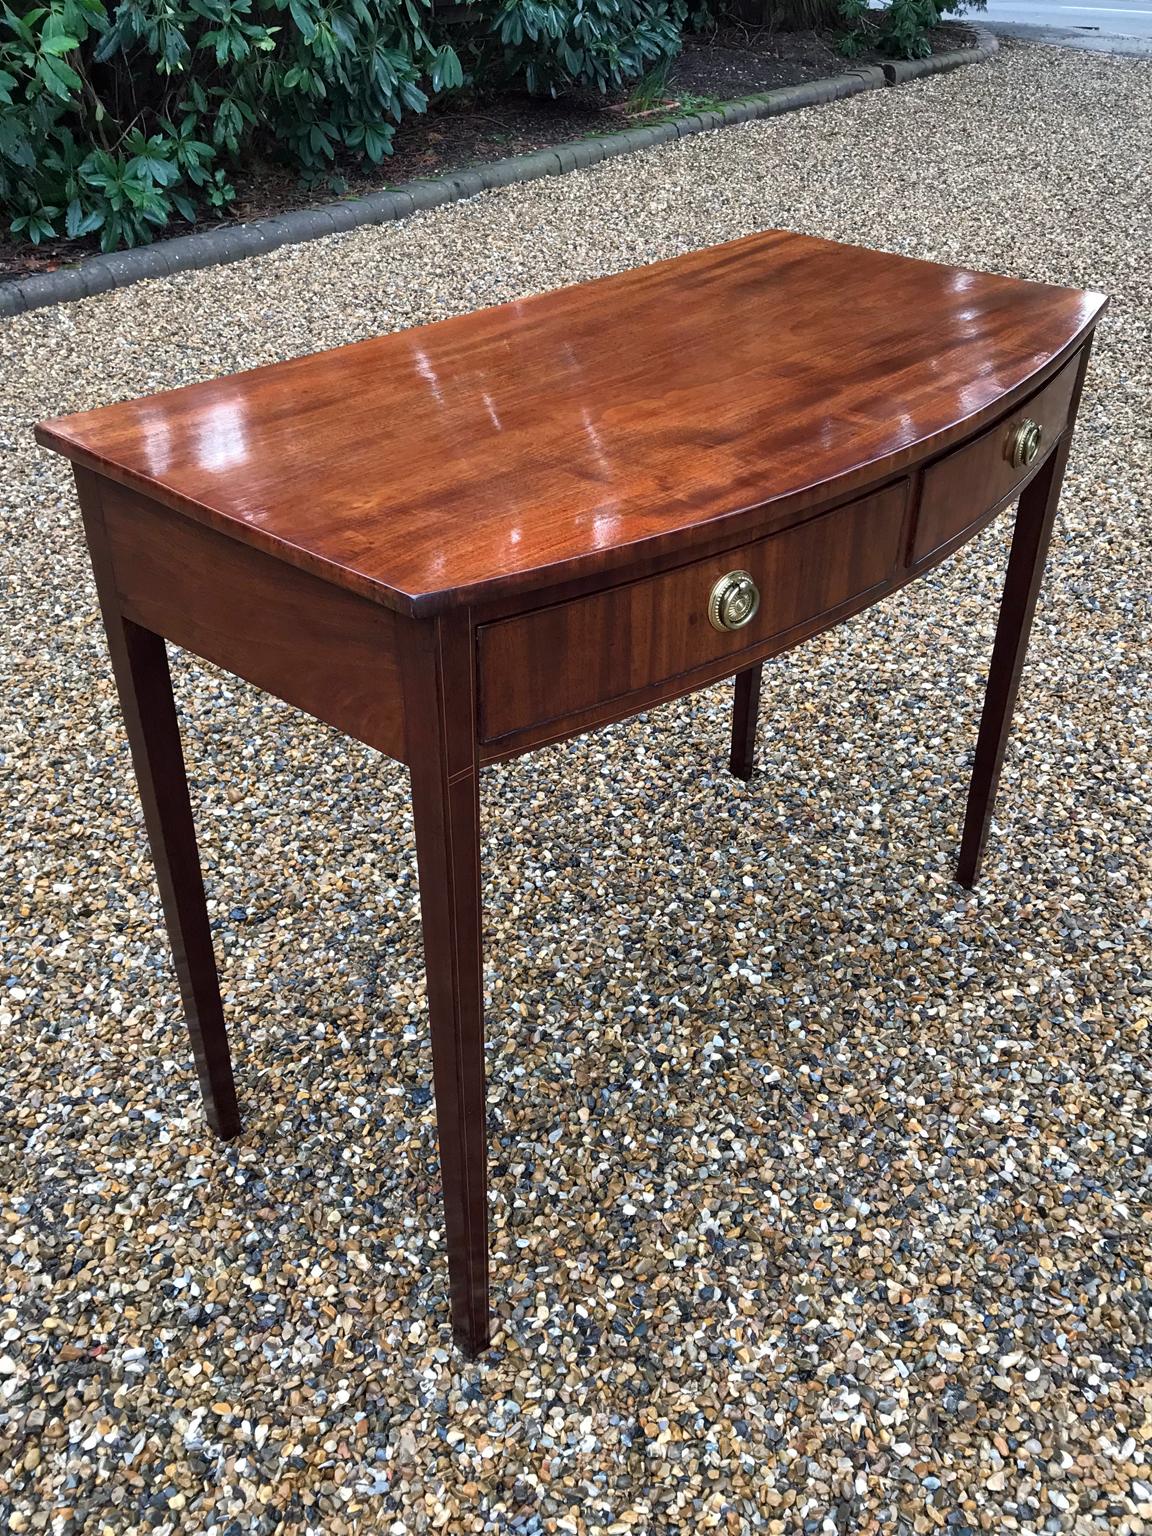 19th Century Regency Mahogany Bow Fronted Side Table (Handgefertigt)